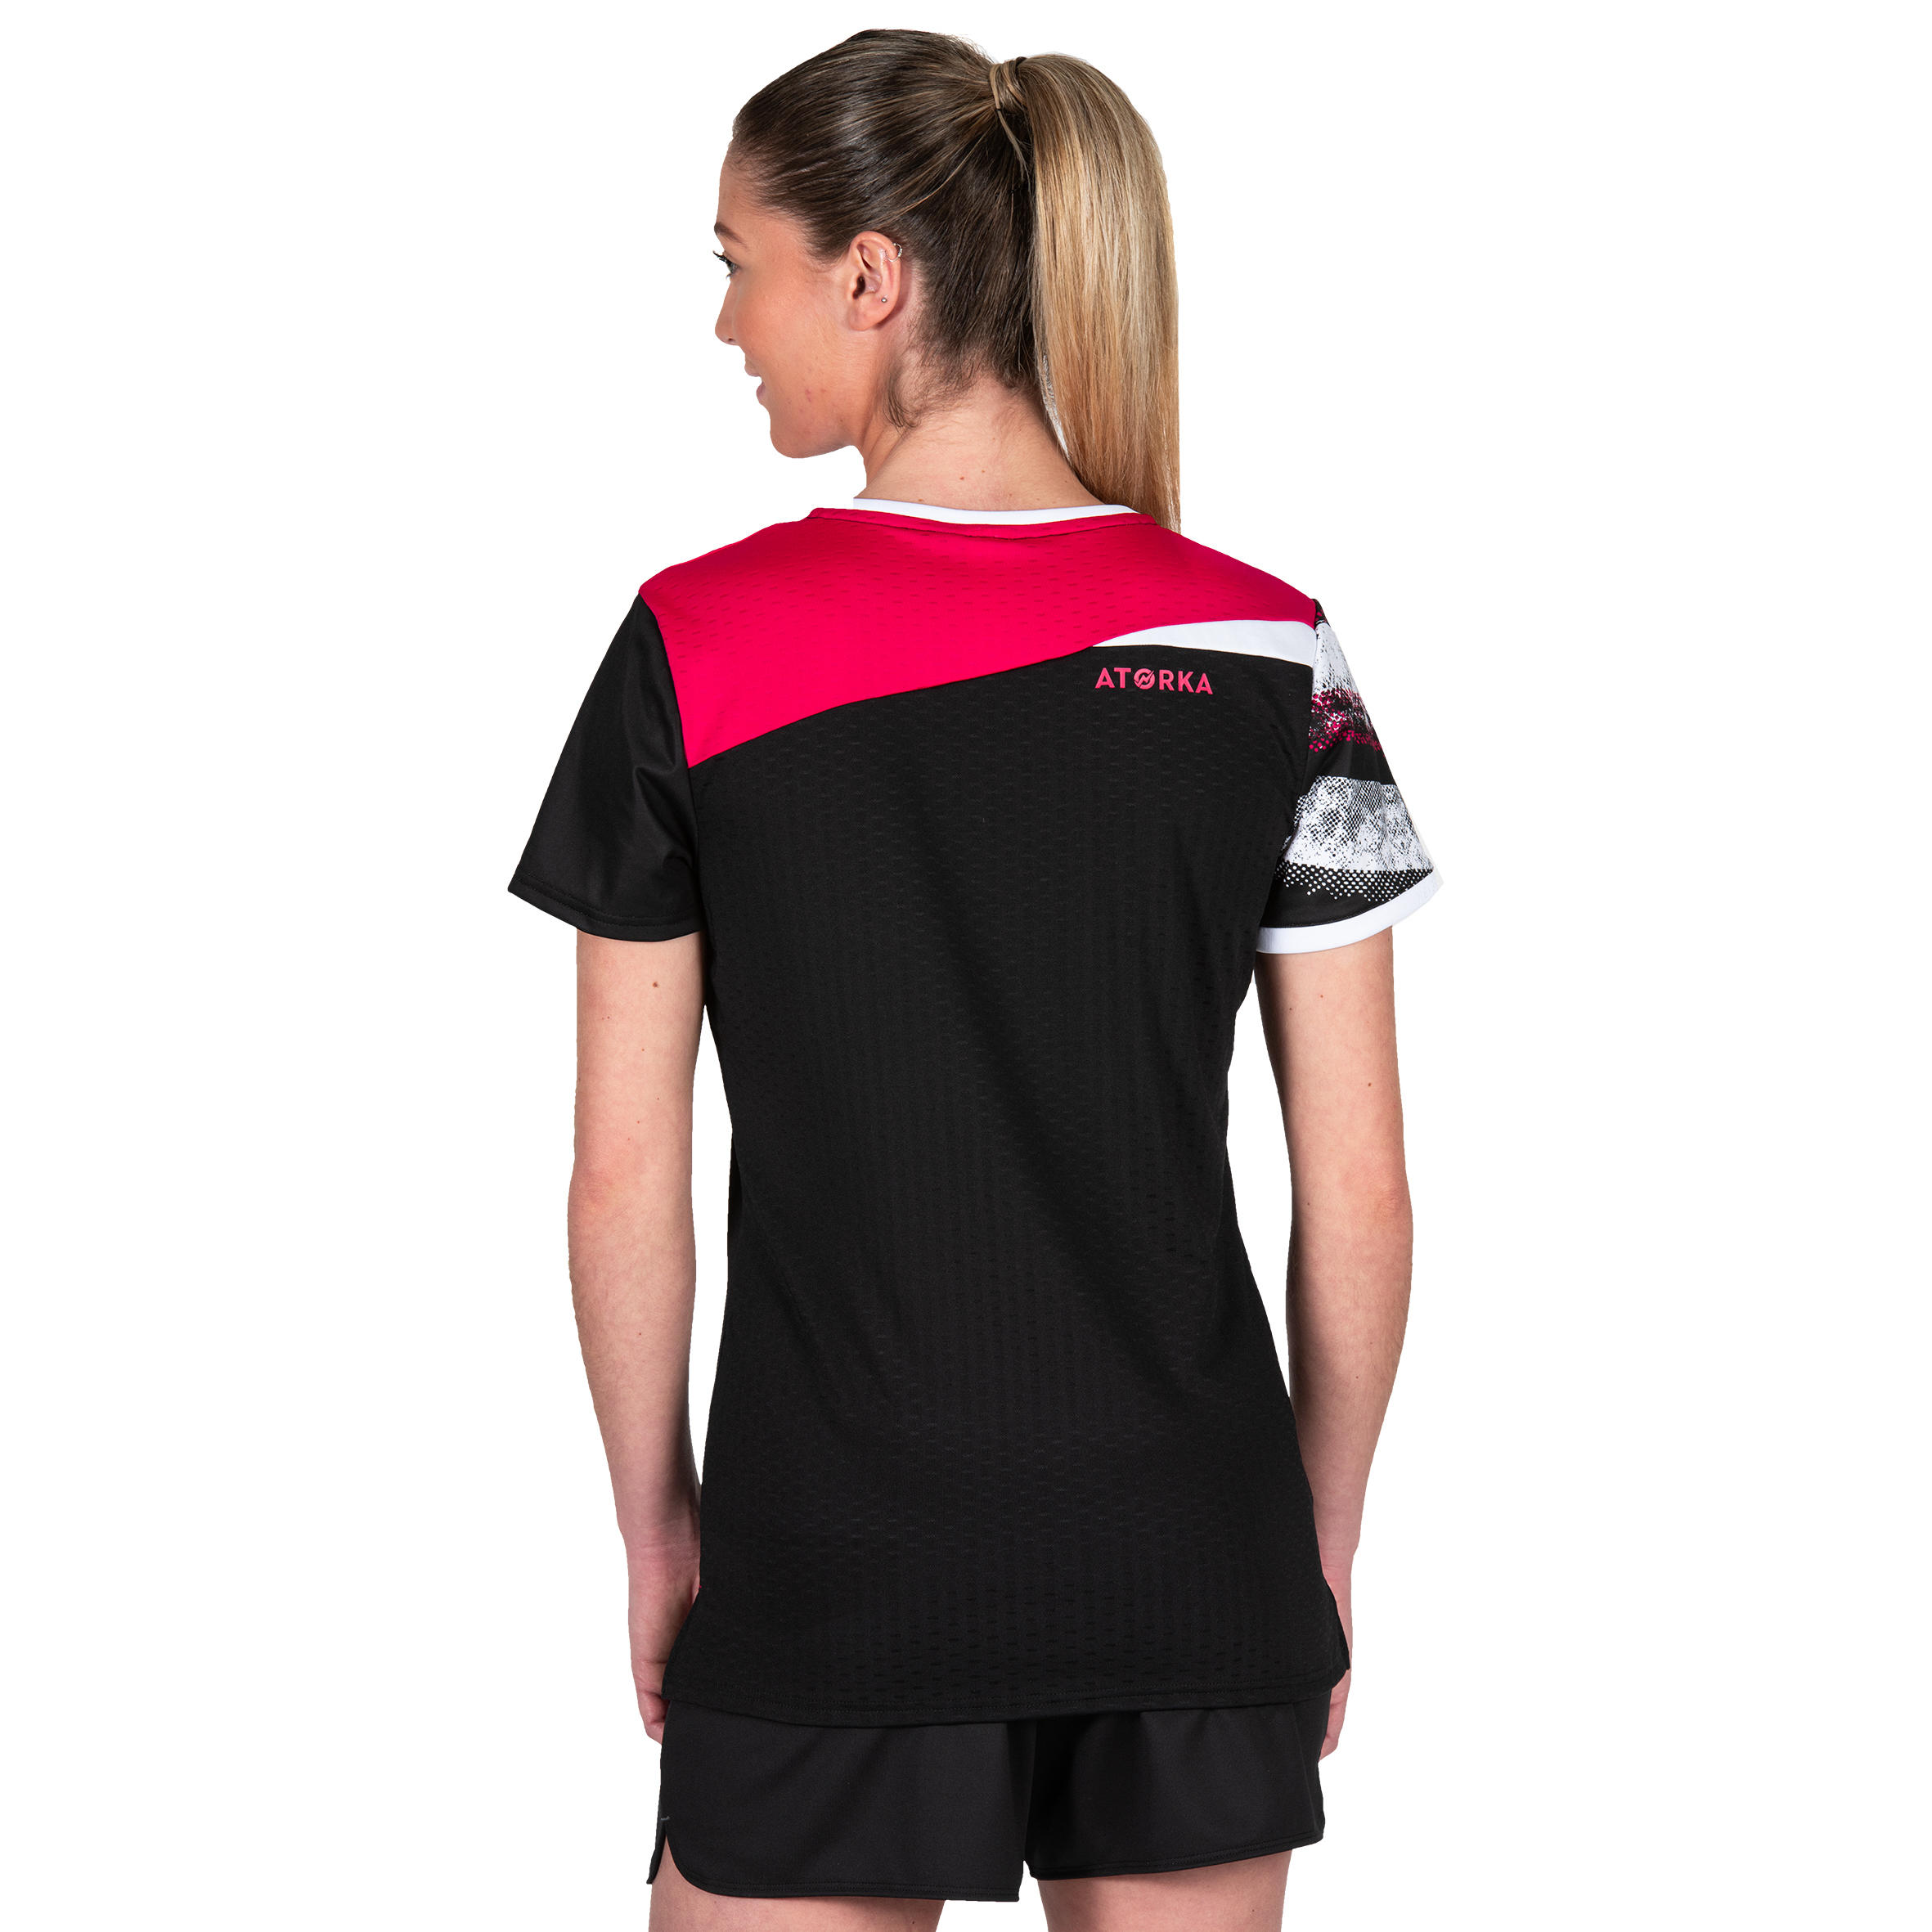 H500 Handball Jersey - Black/Pink 4/8